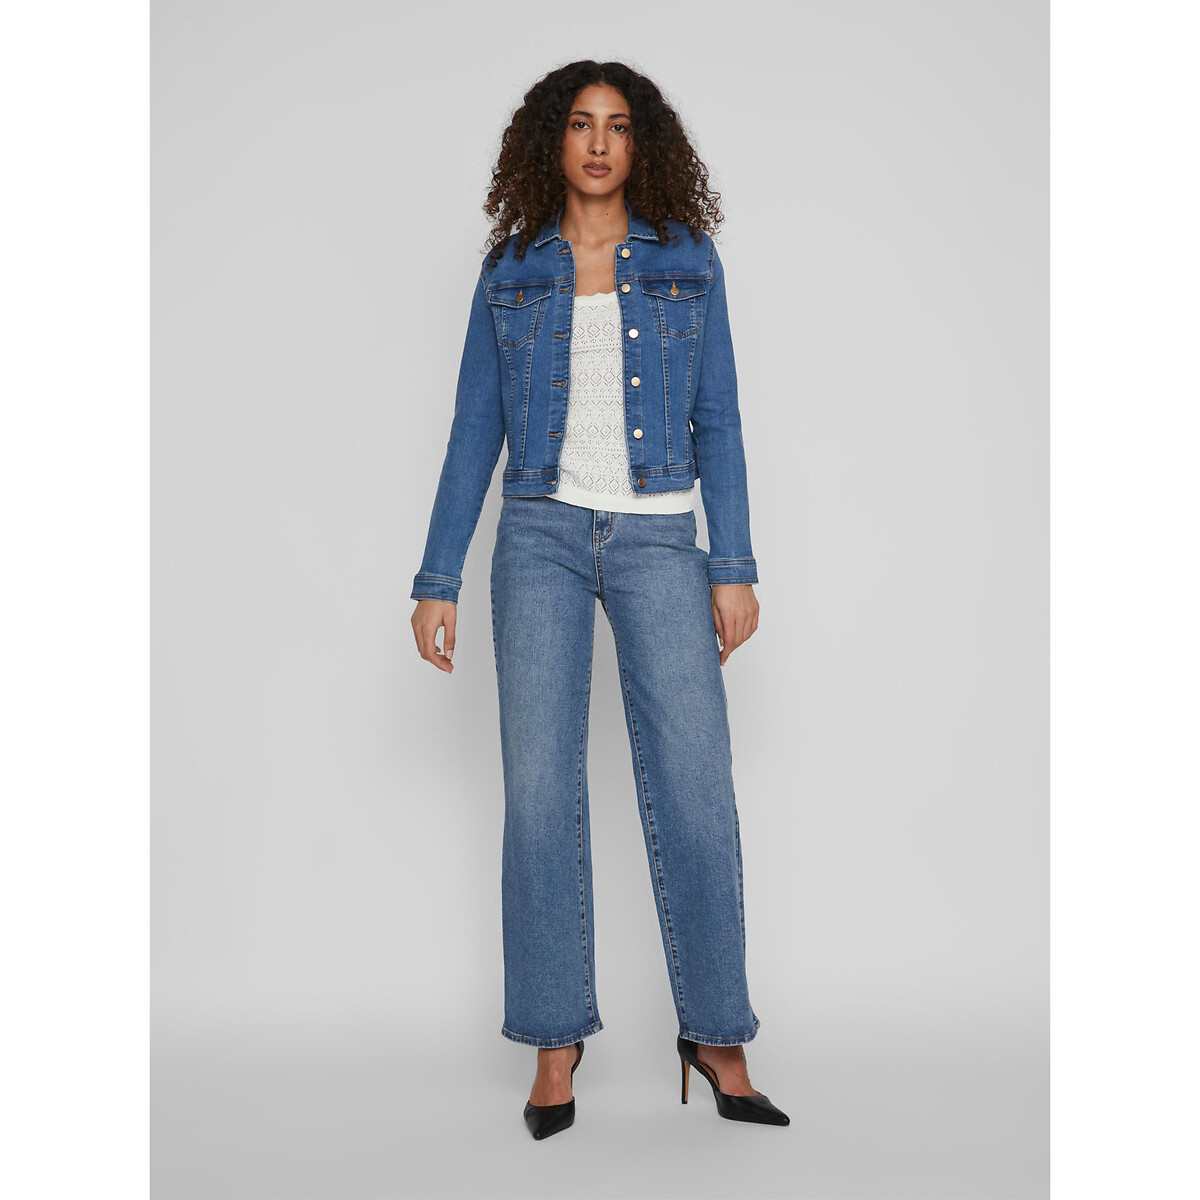 Жакет Короткий из джинсовой ткани L синий LaRedoute, размер L - фото 4